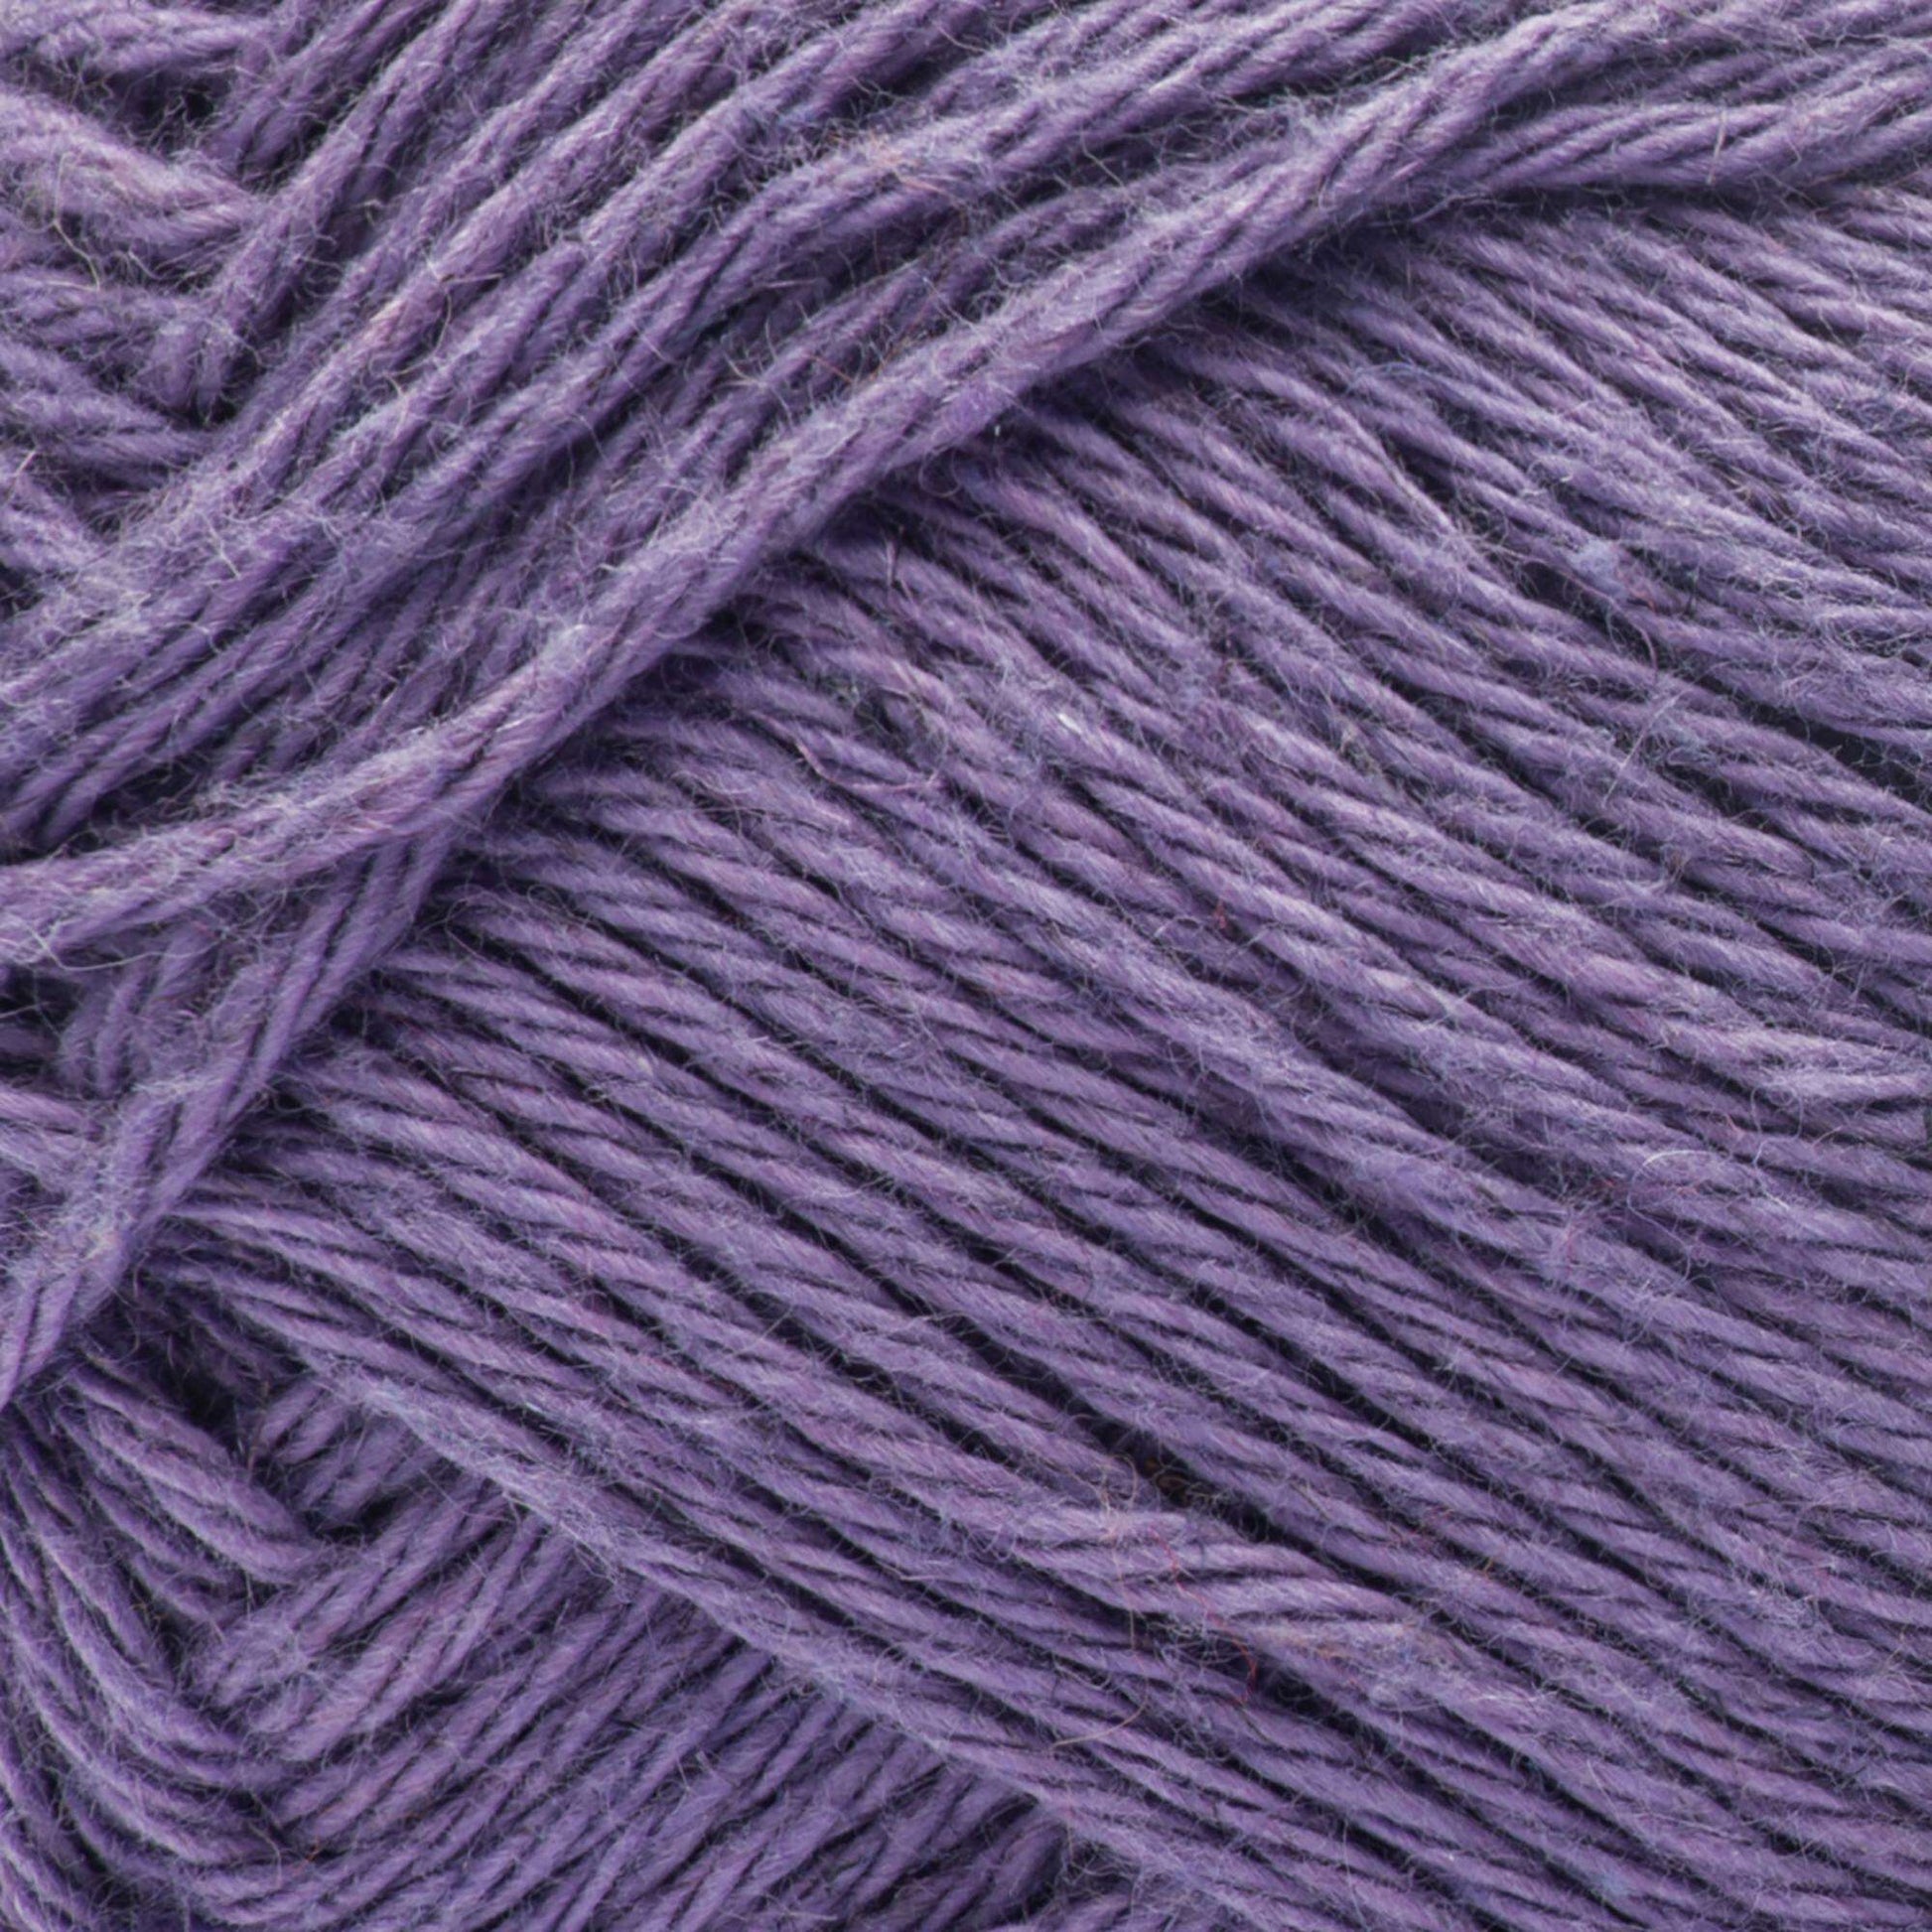 Patons Linen Yarn Lilac